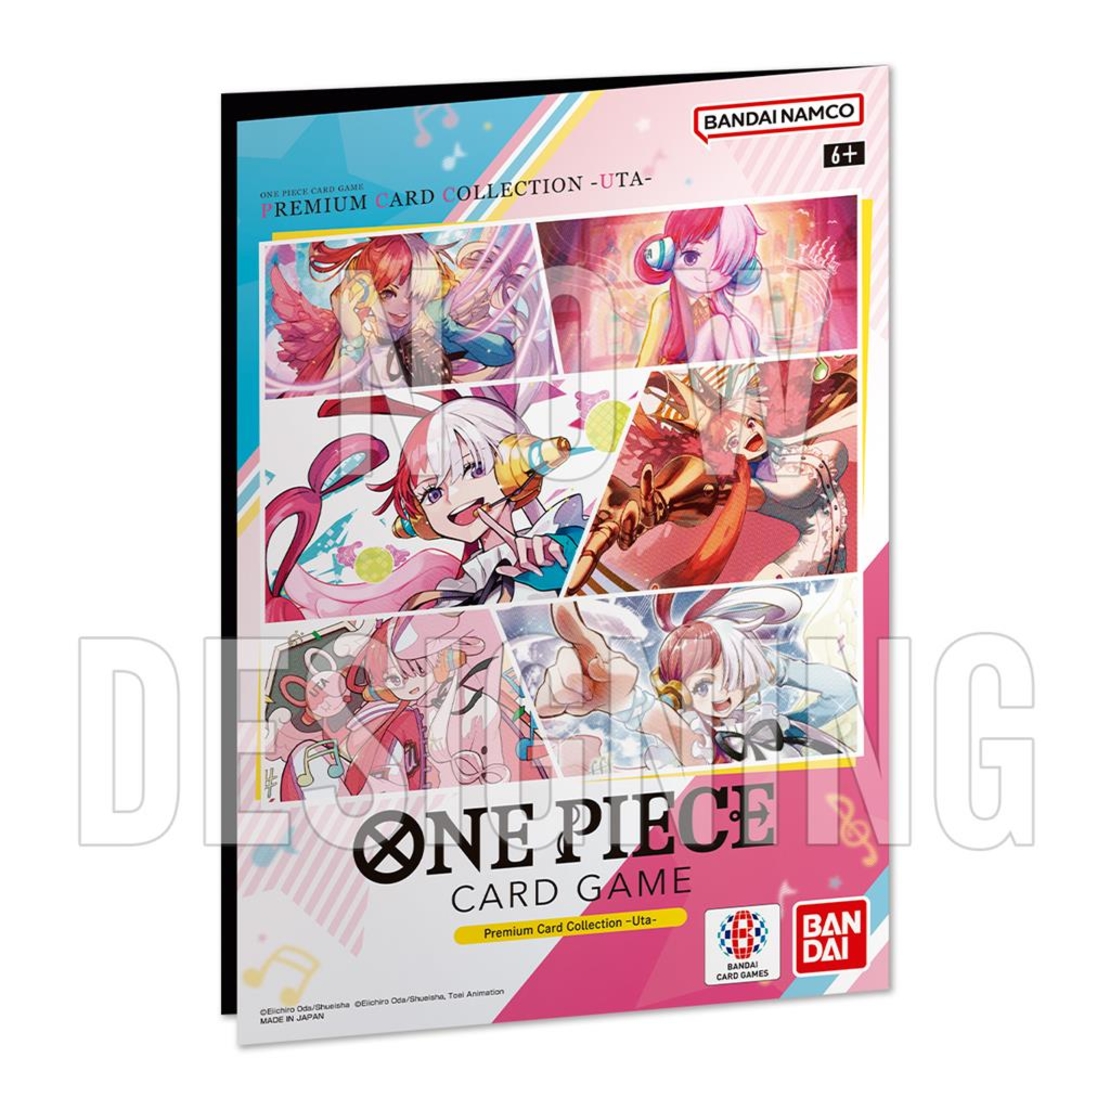 PRE-ORDER: One Piece Card Game Premium Card Collection - Uta